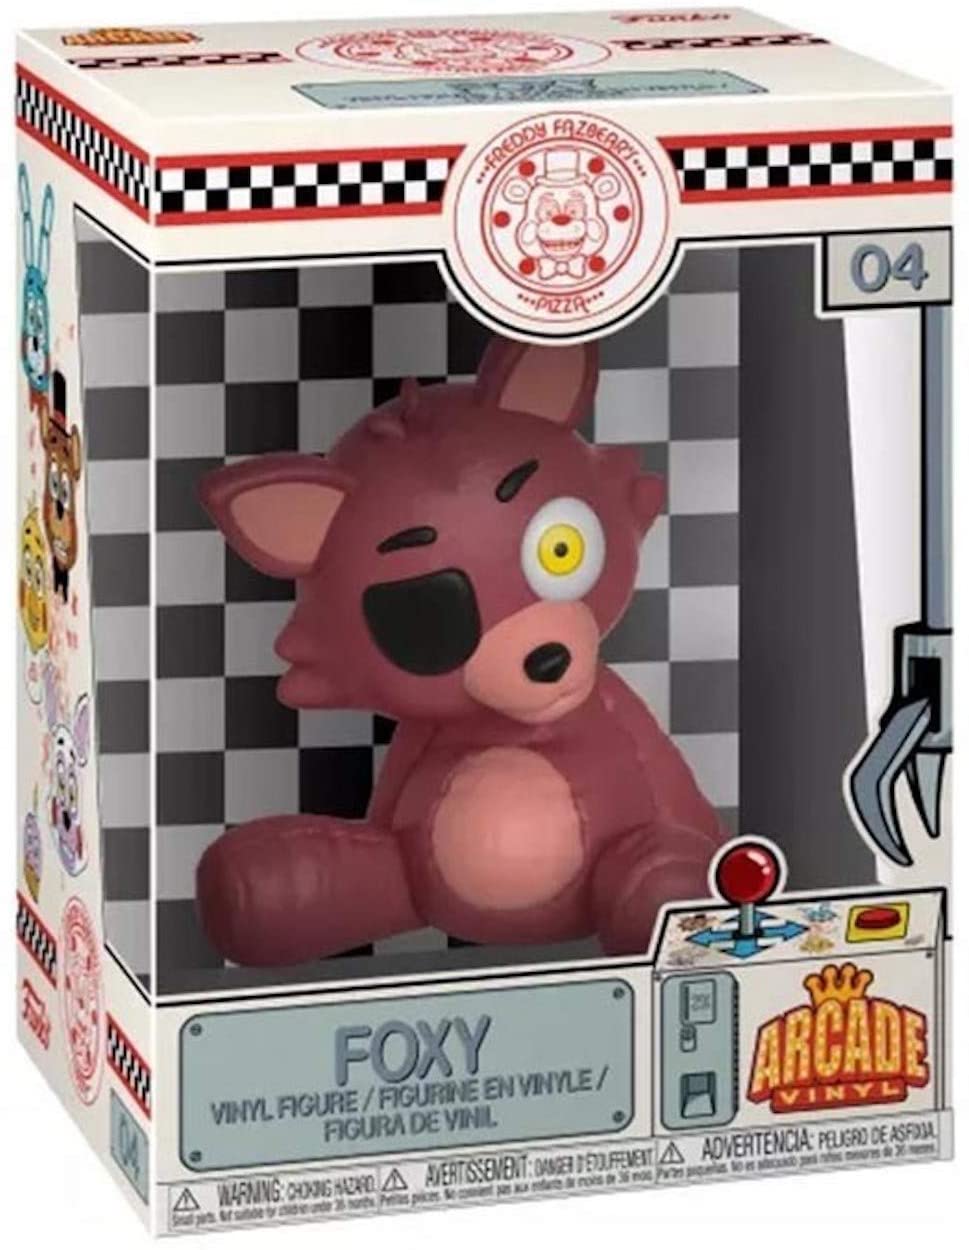 Funko Pop! Arcade Vinyl - Five Nights at Freddy's - Foxy Pirate